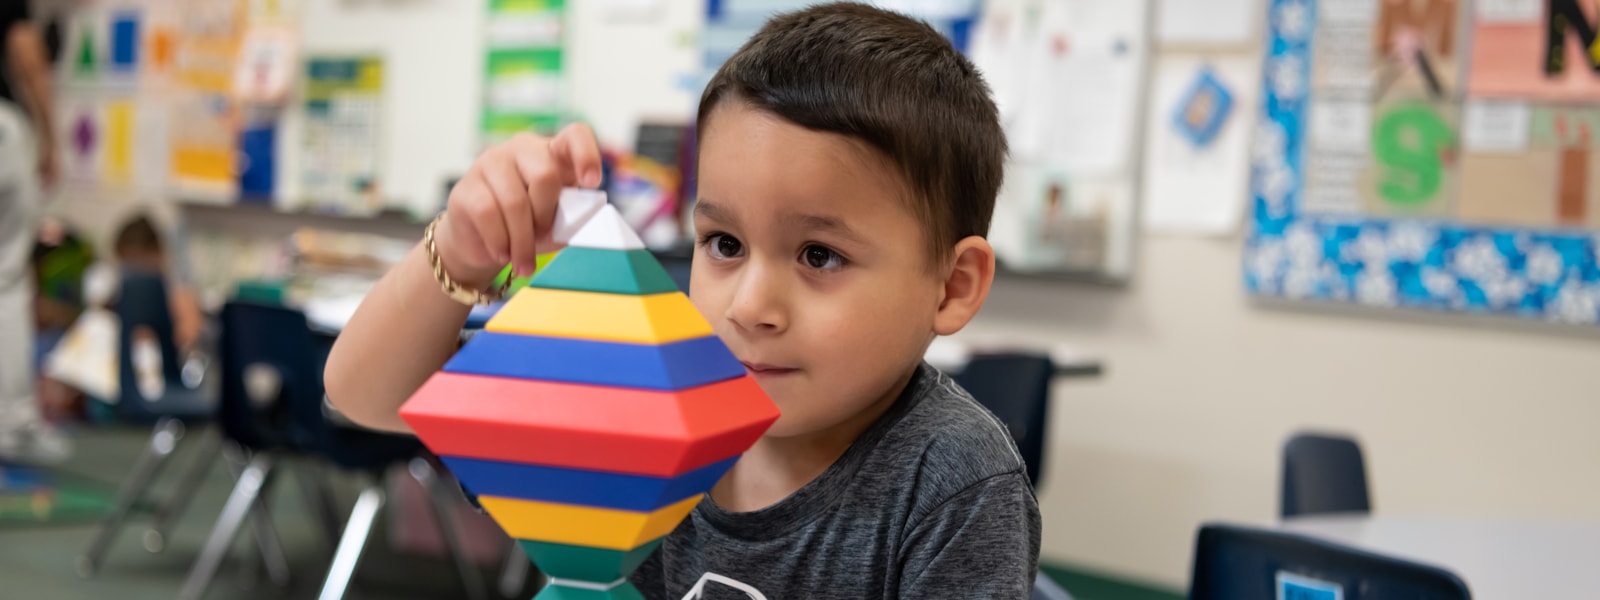 Preschool student with building blocks